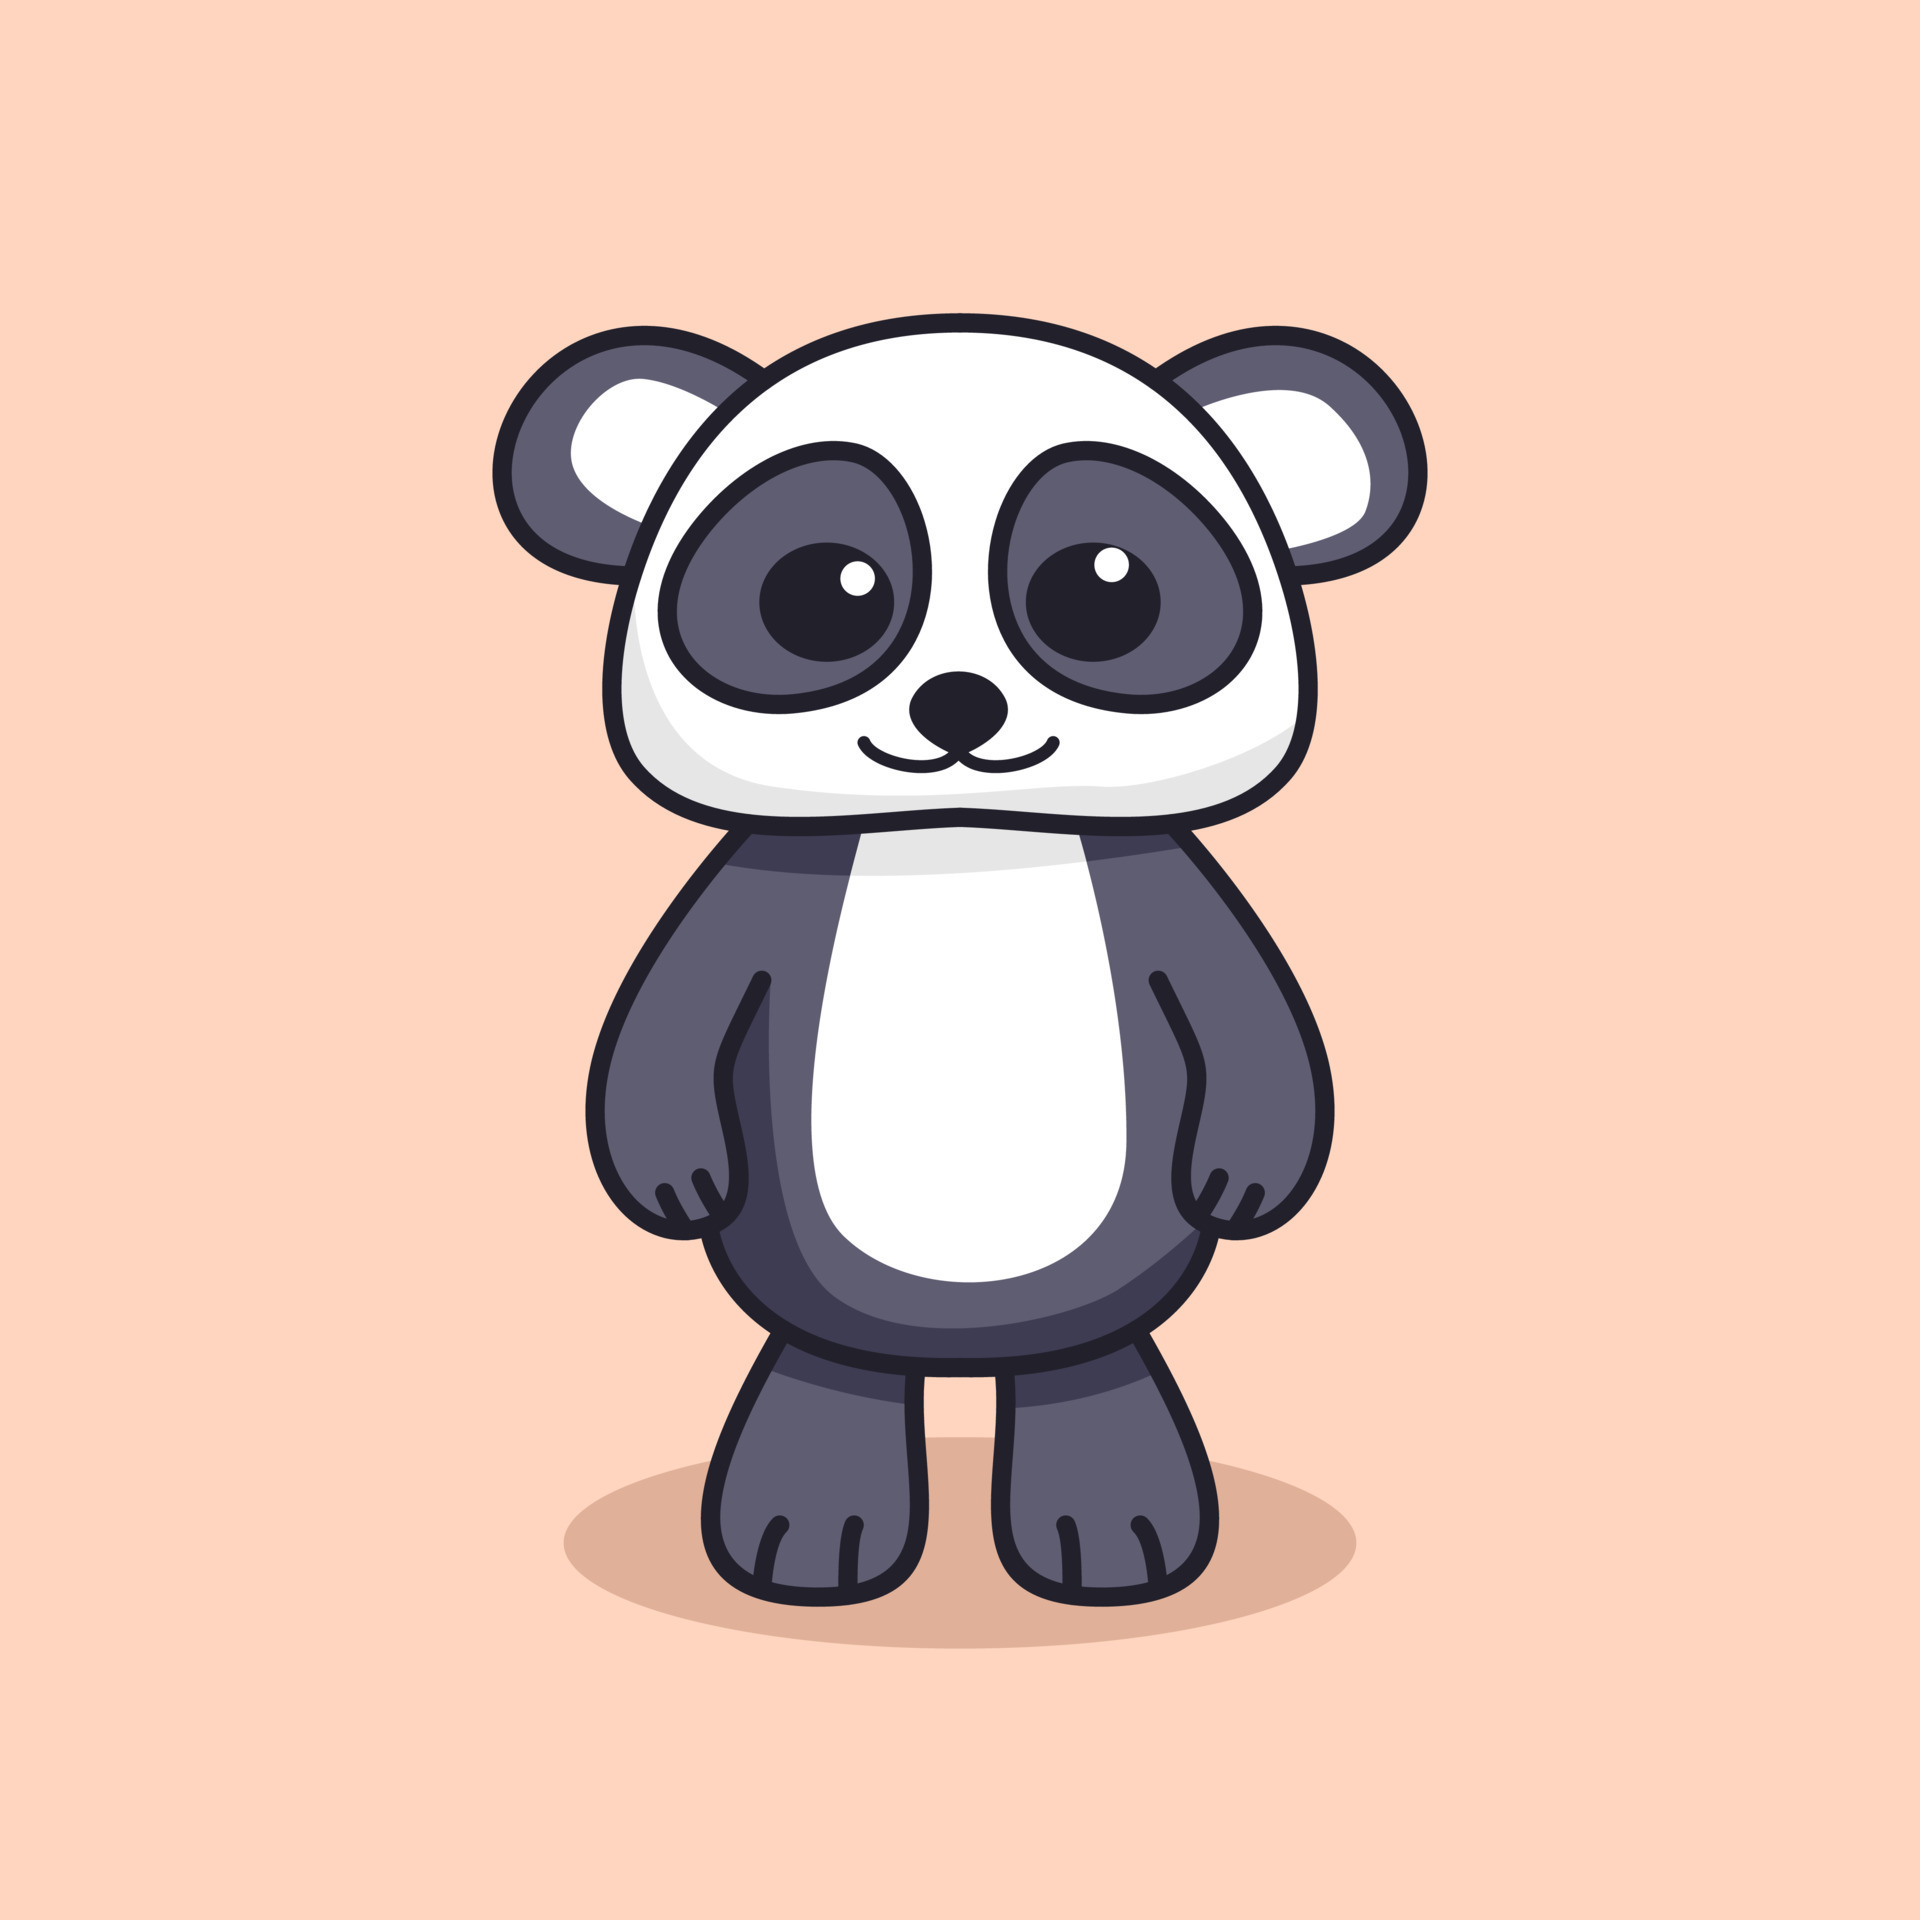 Cute Panda Premium Vector Illustration 9971384 Vector Art at Vecteezy